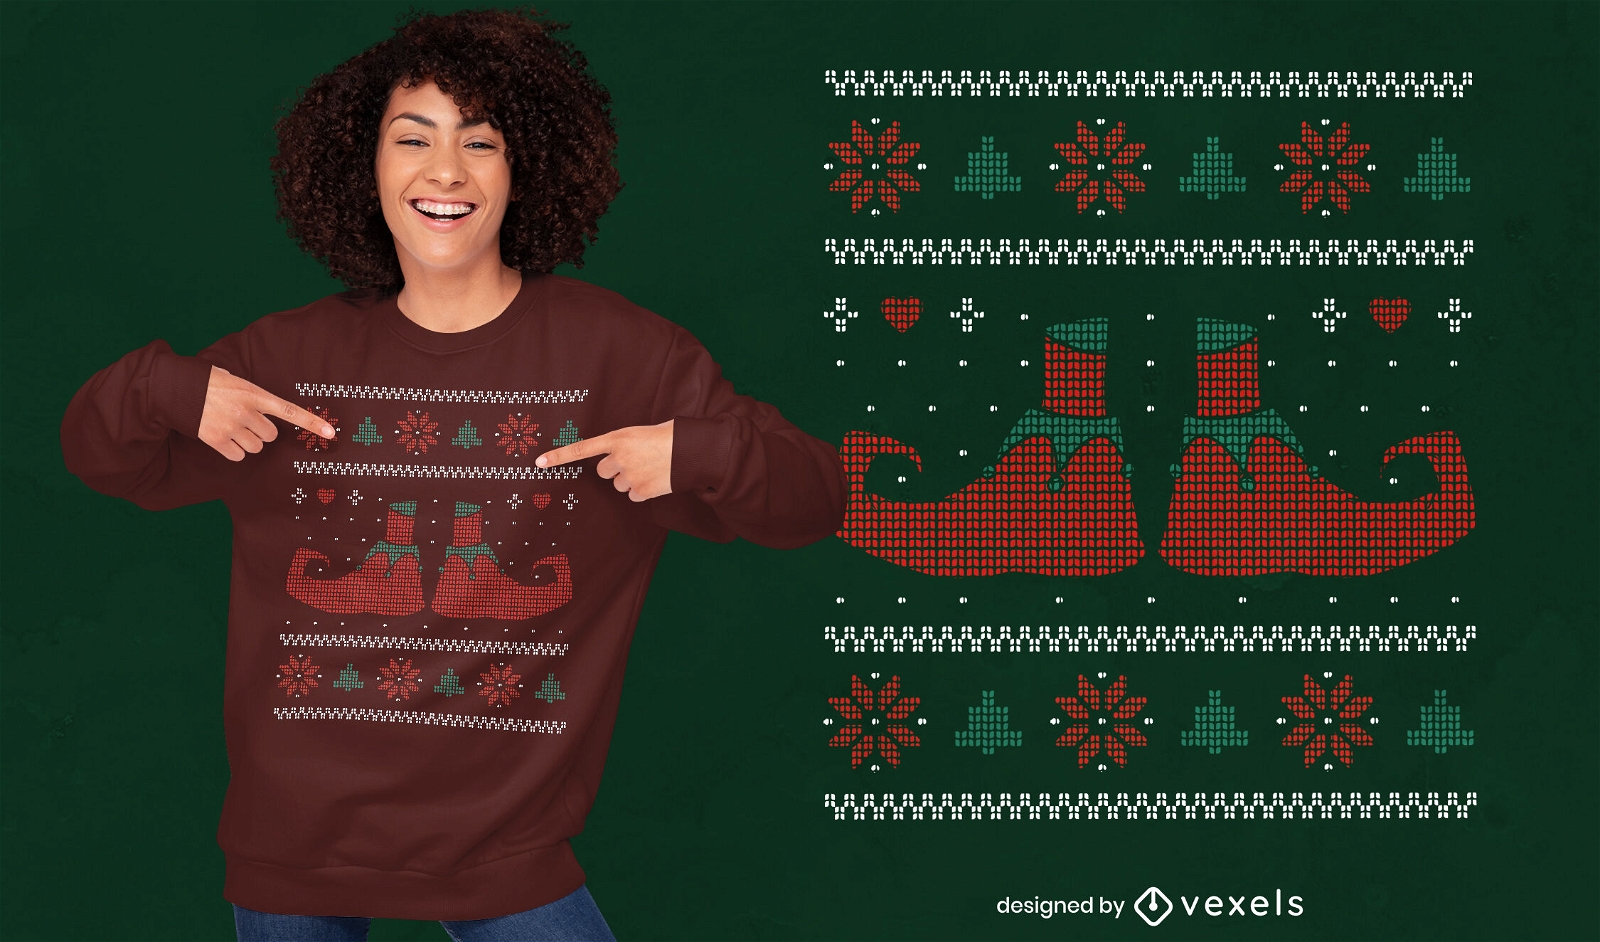 Ugly sweater christmas elf t-shirt design